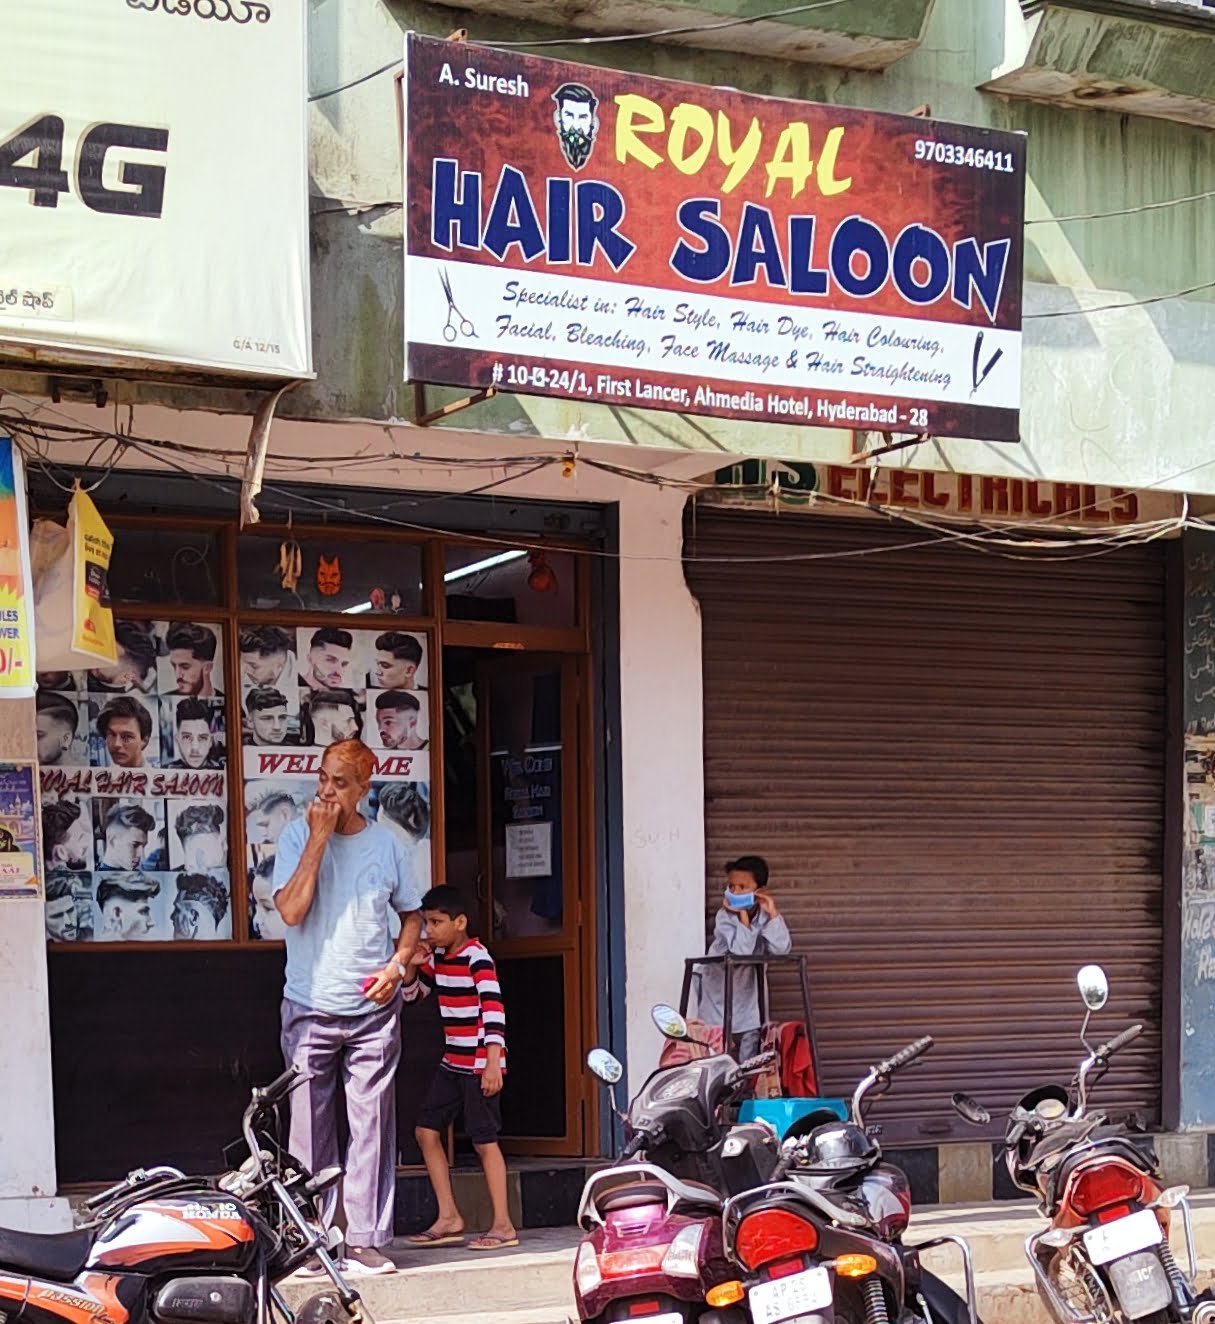 Royal Hair Saloon in First Lancer